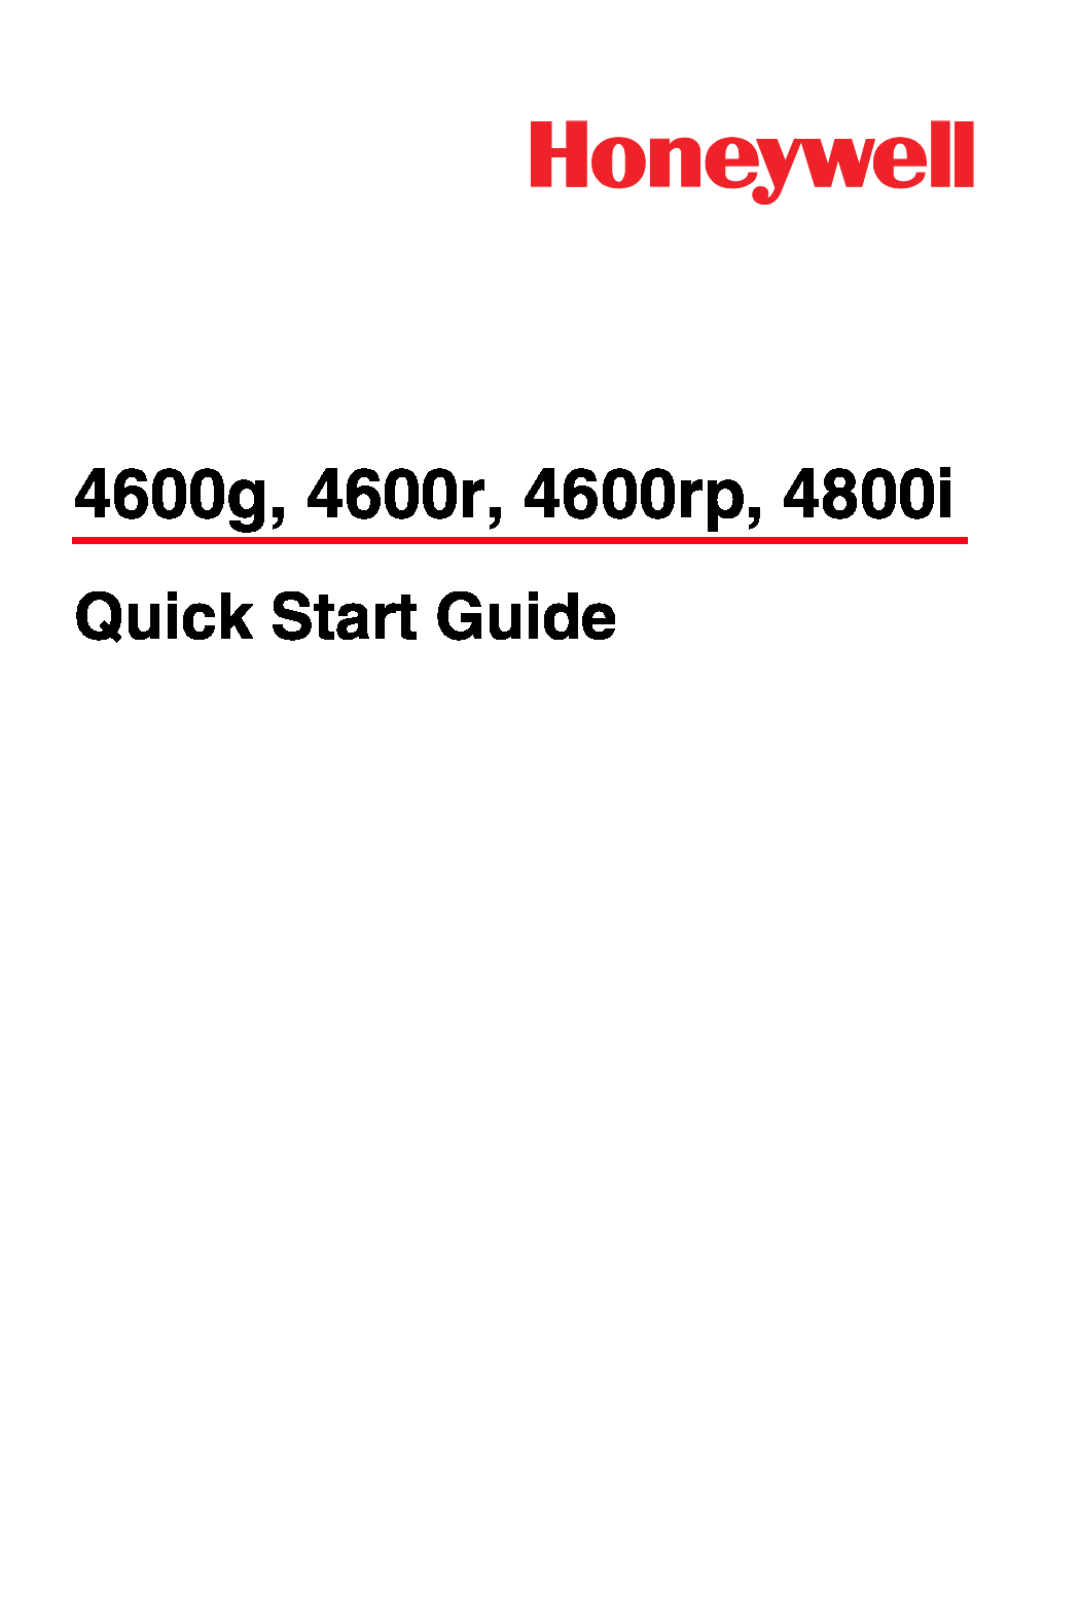 Honeywell 4800i quick start 4600g, 4600r, 4600rp, Quick Start Guide 